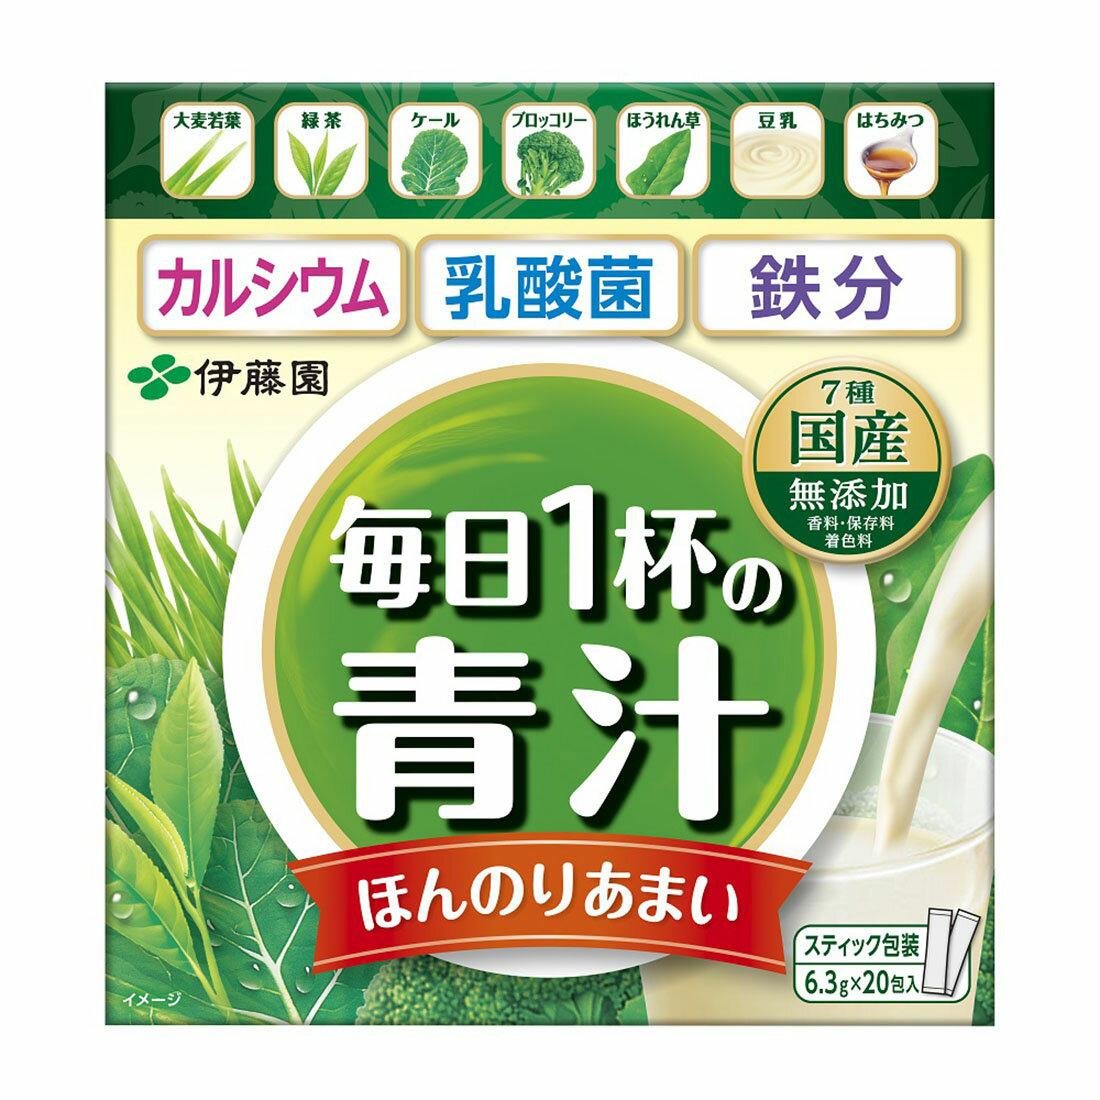 P-1-ITO-AOJ-GJ-20-Itoen Everyday Aojiru Green Juice Powder 20 Sticks.jpg